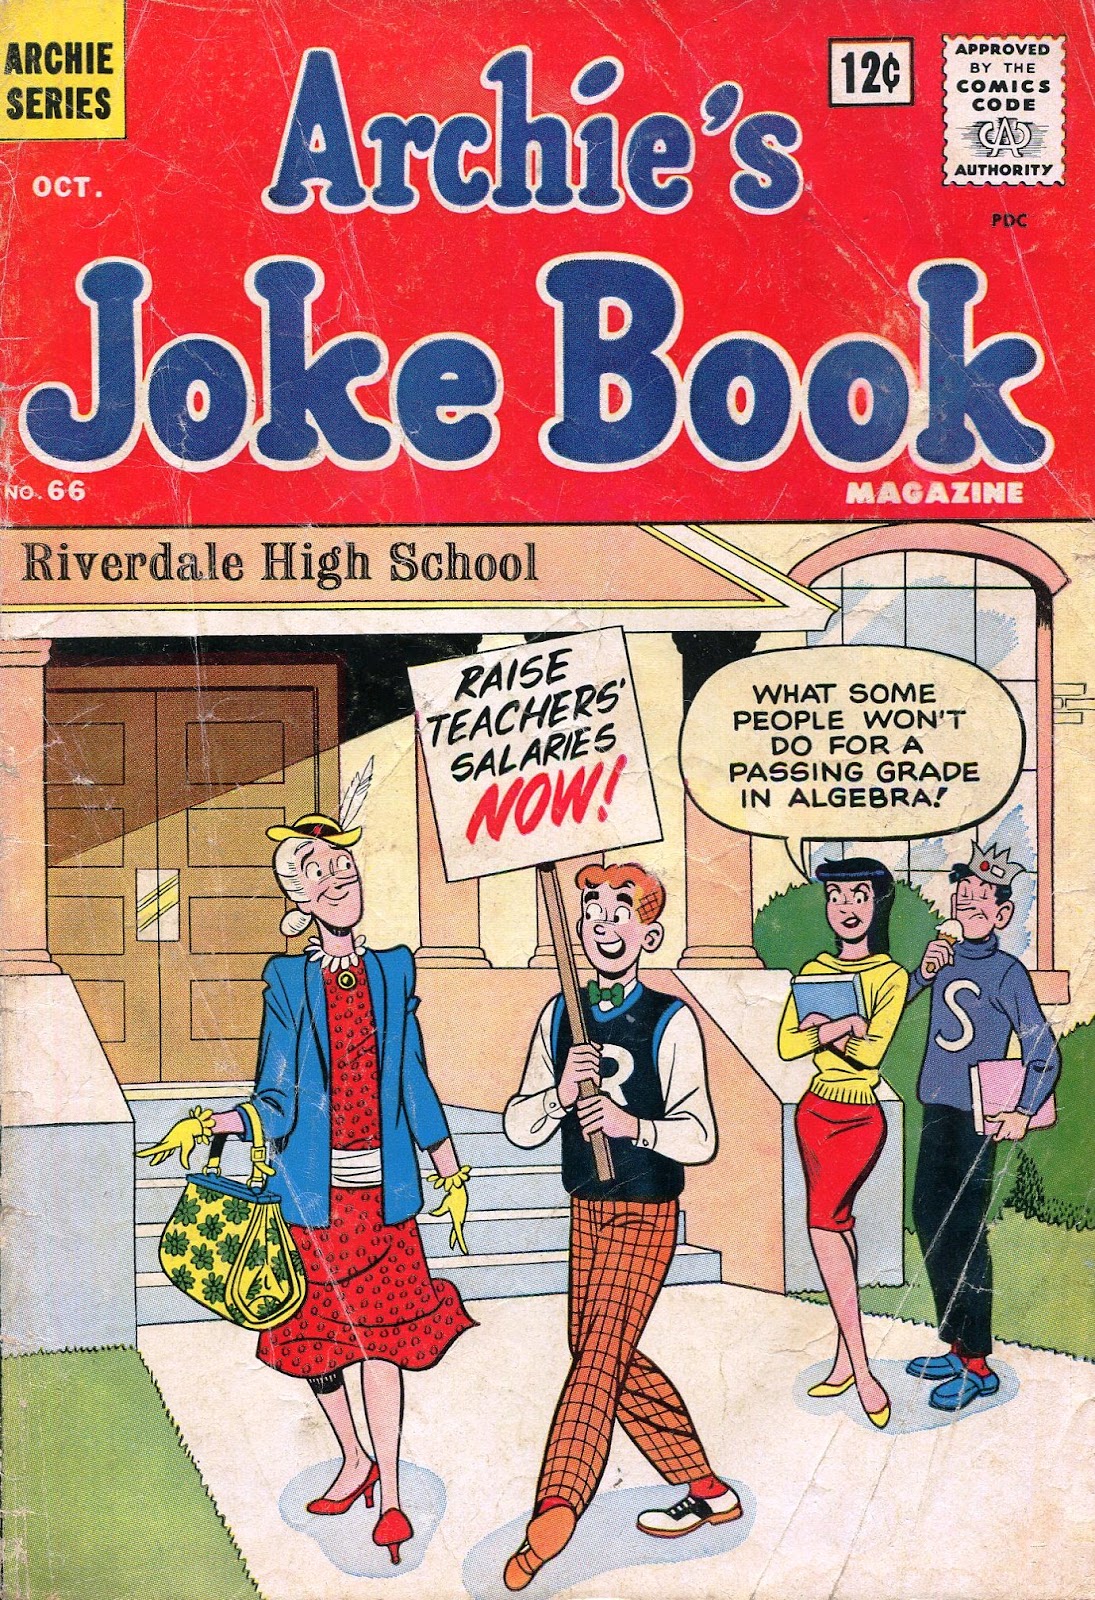 Archie's Joke Book Magazine issue 66 - Page 1